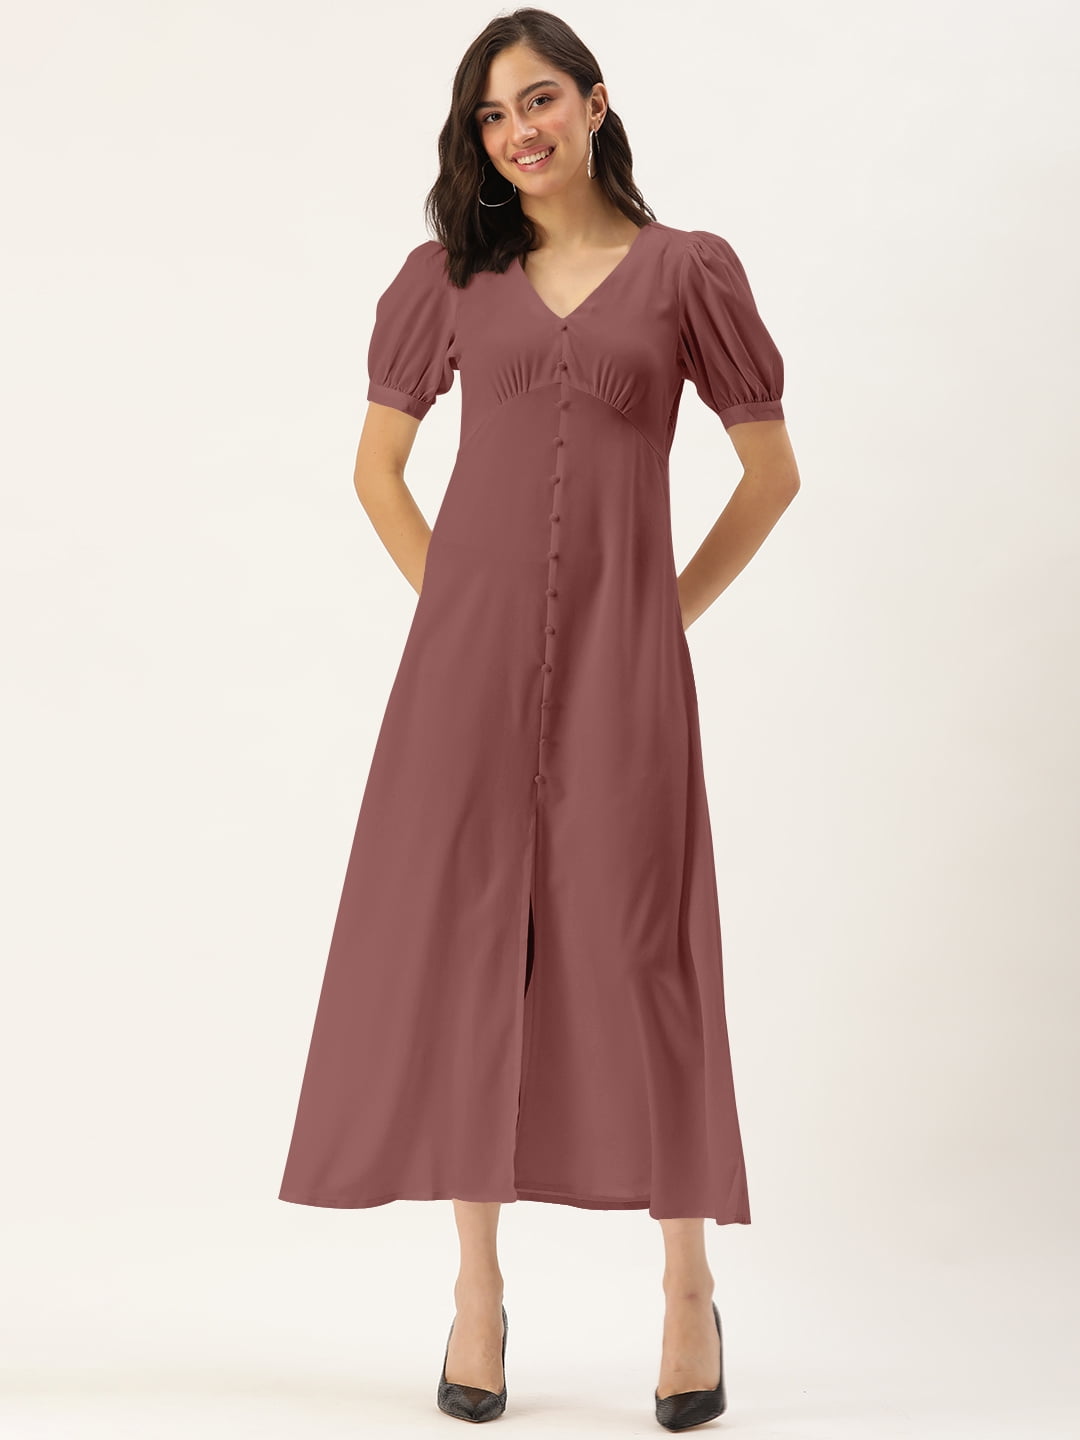 fcity.in - Trendy Soft Polyester Crepe Dress / Pretty Fabulous Women Dresses